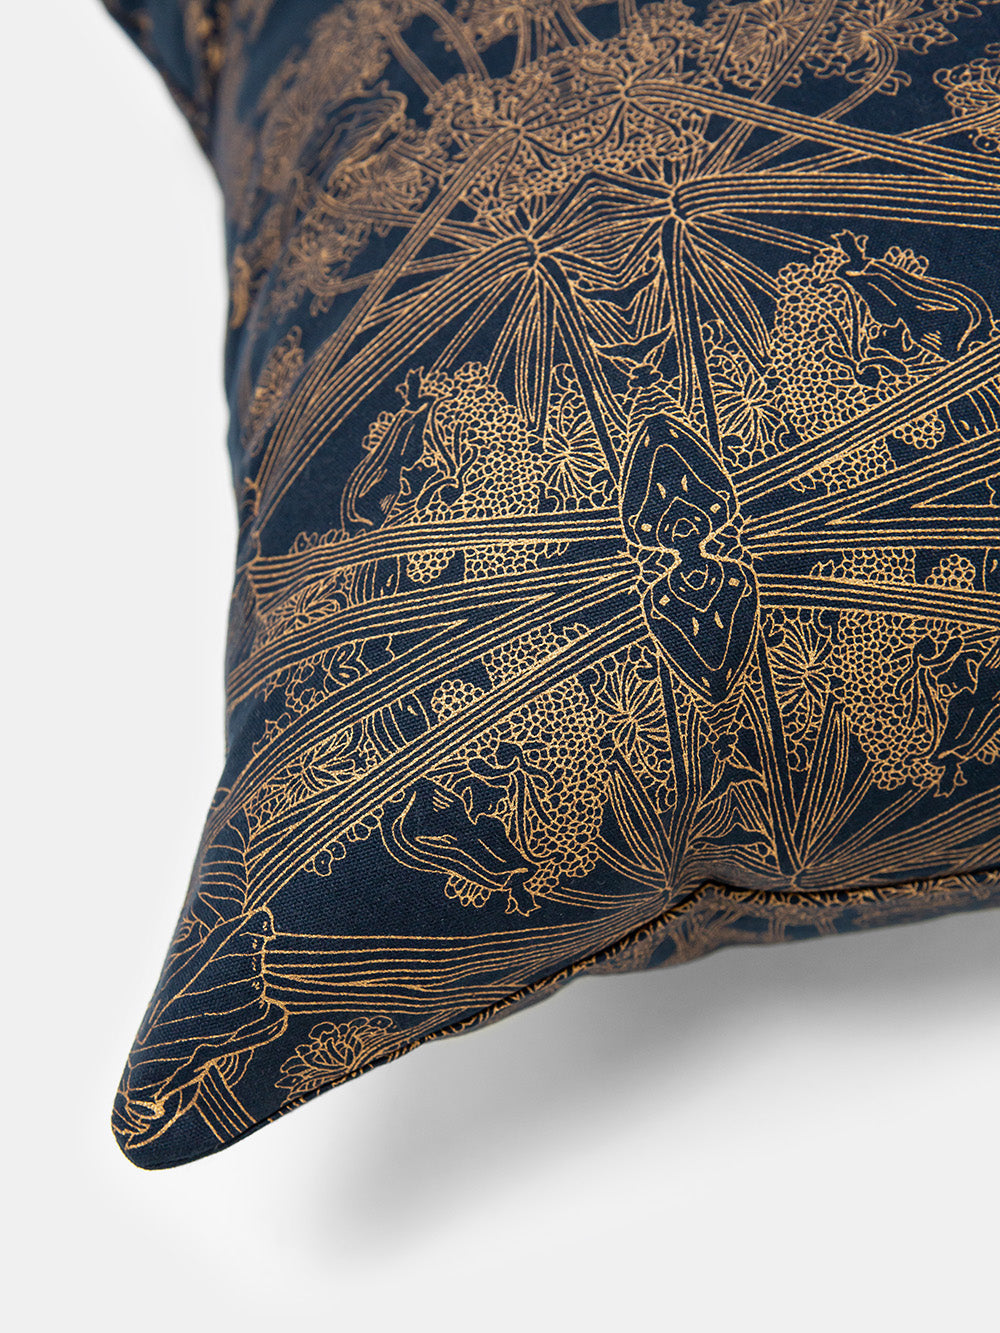 Botanicus Throw Pillow in Navy/Gold